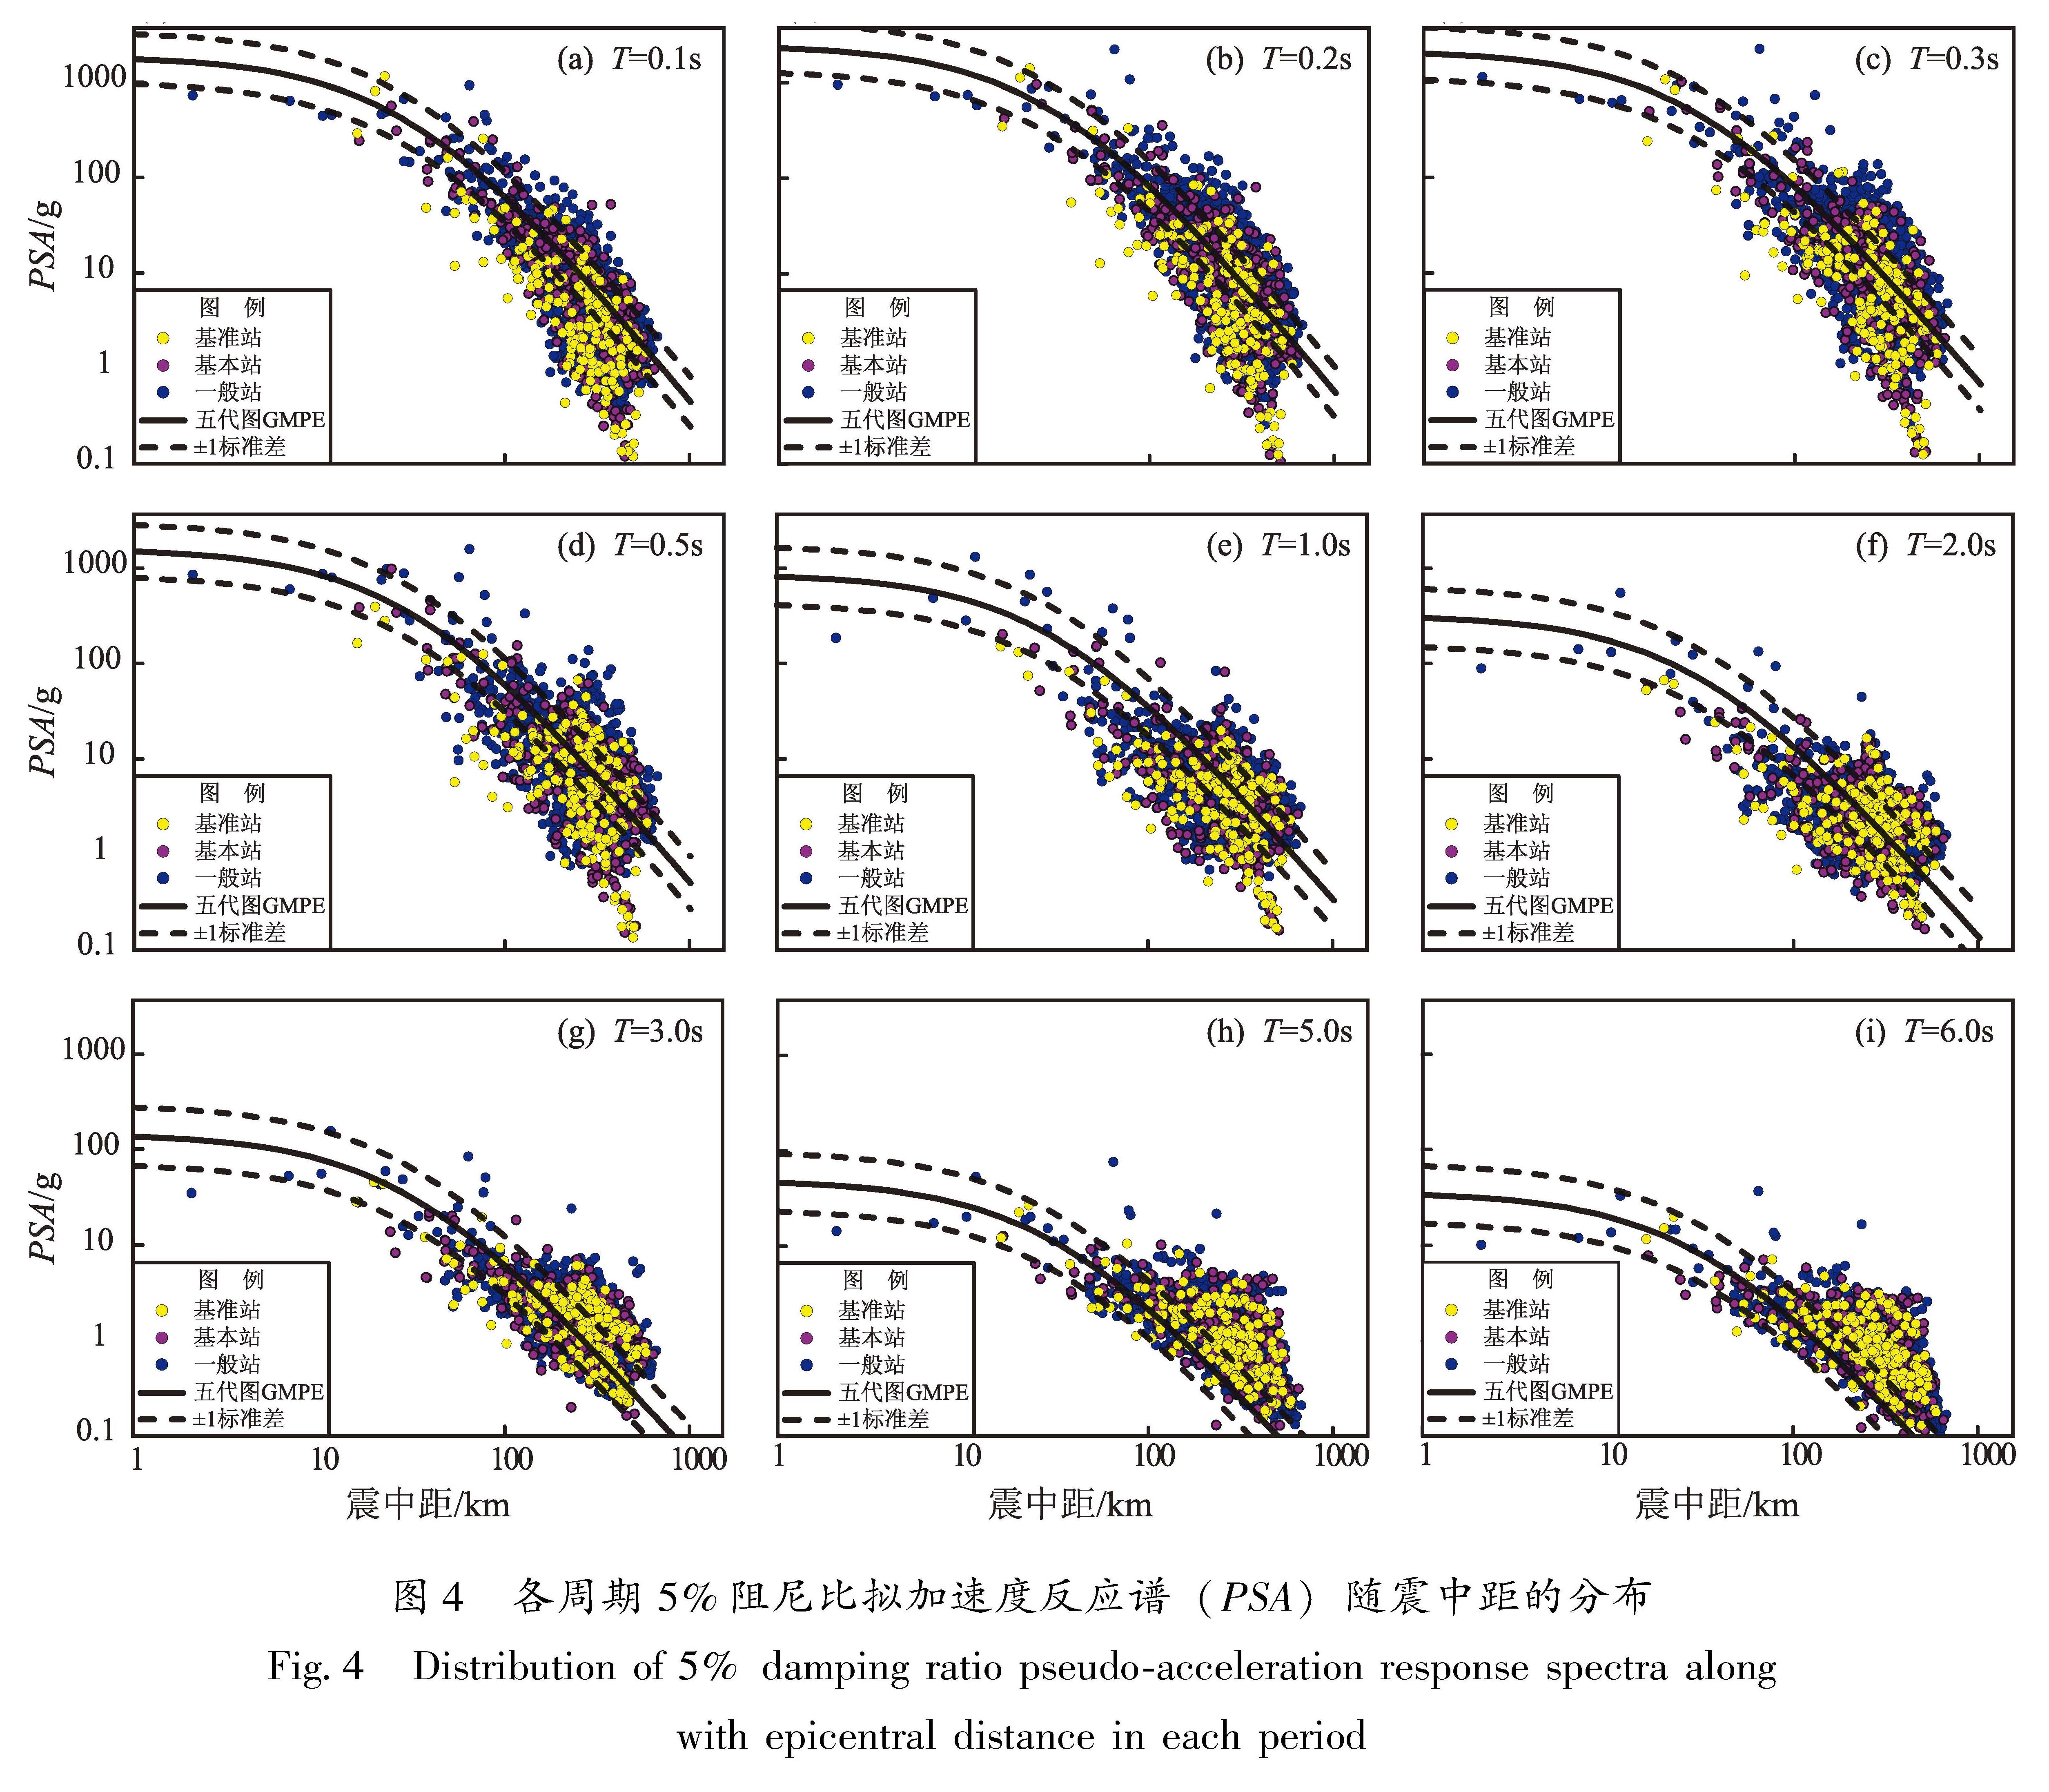 图4 各周期 5%阻尼比拟加速度反应谱(PSA)随震中距的分布<br/>Fig.4 Distribution of 5% damping ratio pseudo-acceleration response spectra along with epicentral distance in each period